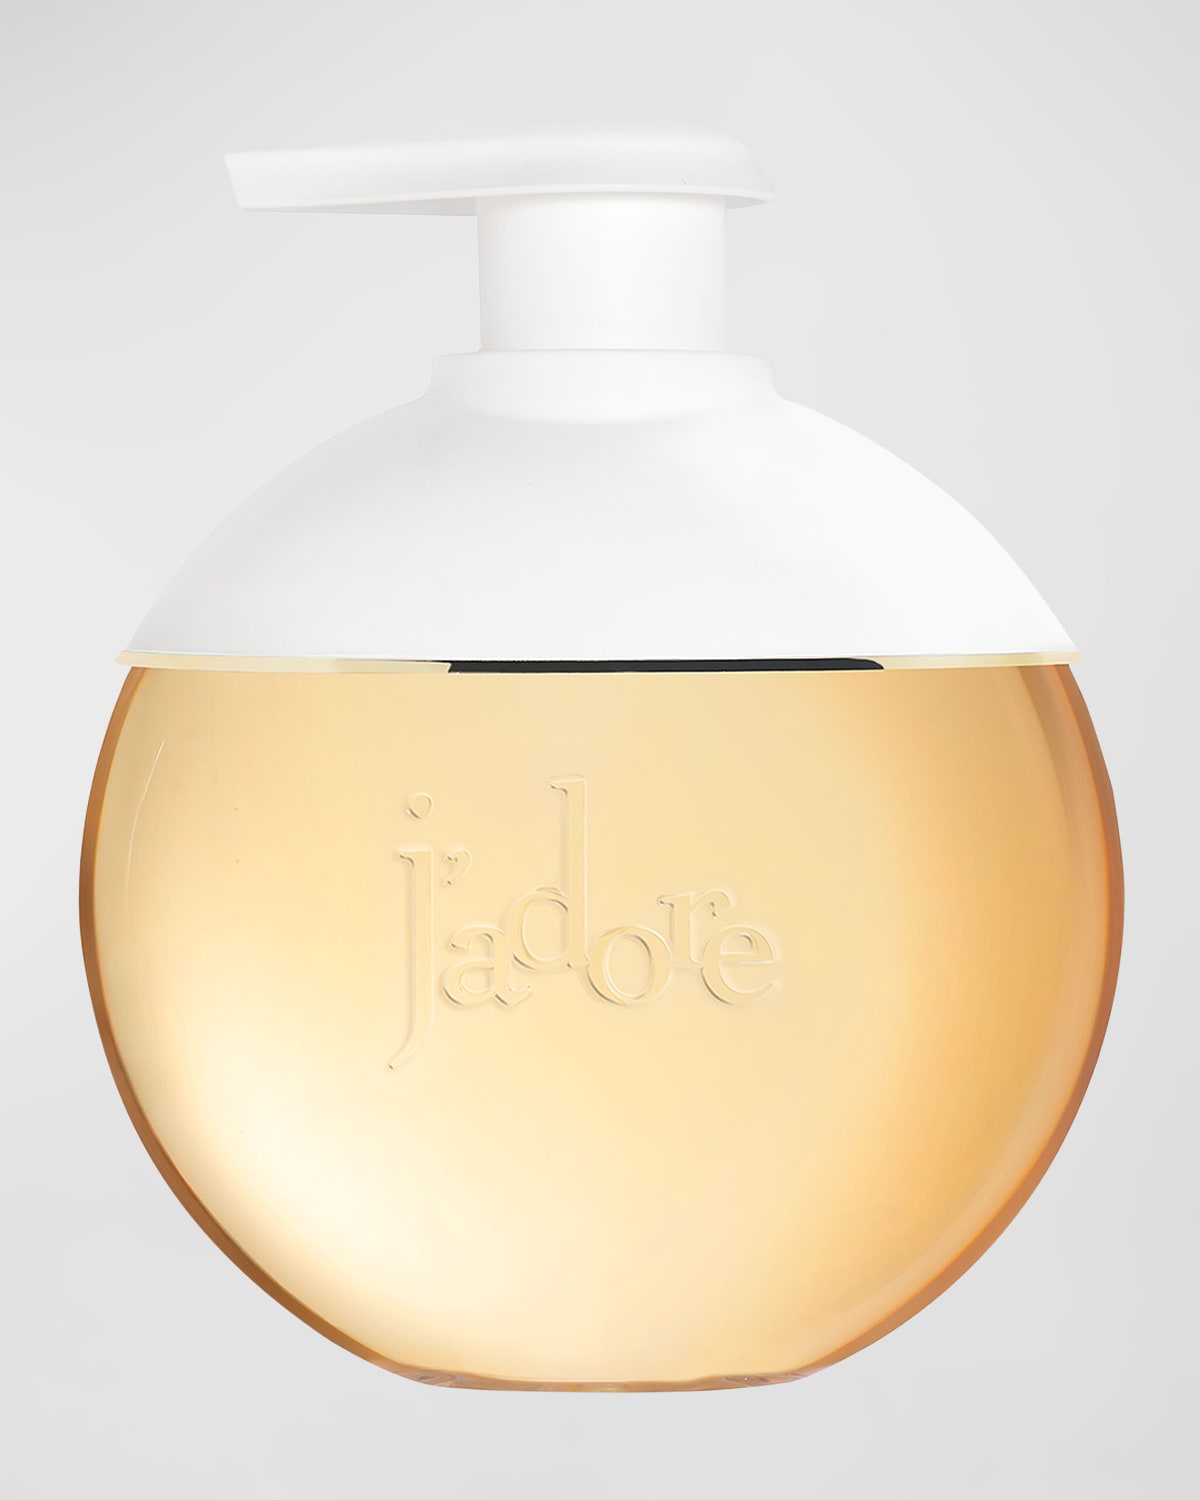 Jadore Les Adorables Shower Gel, 6.8 oz.